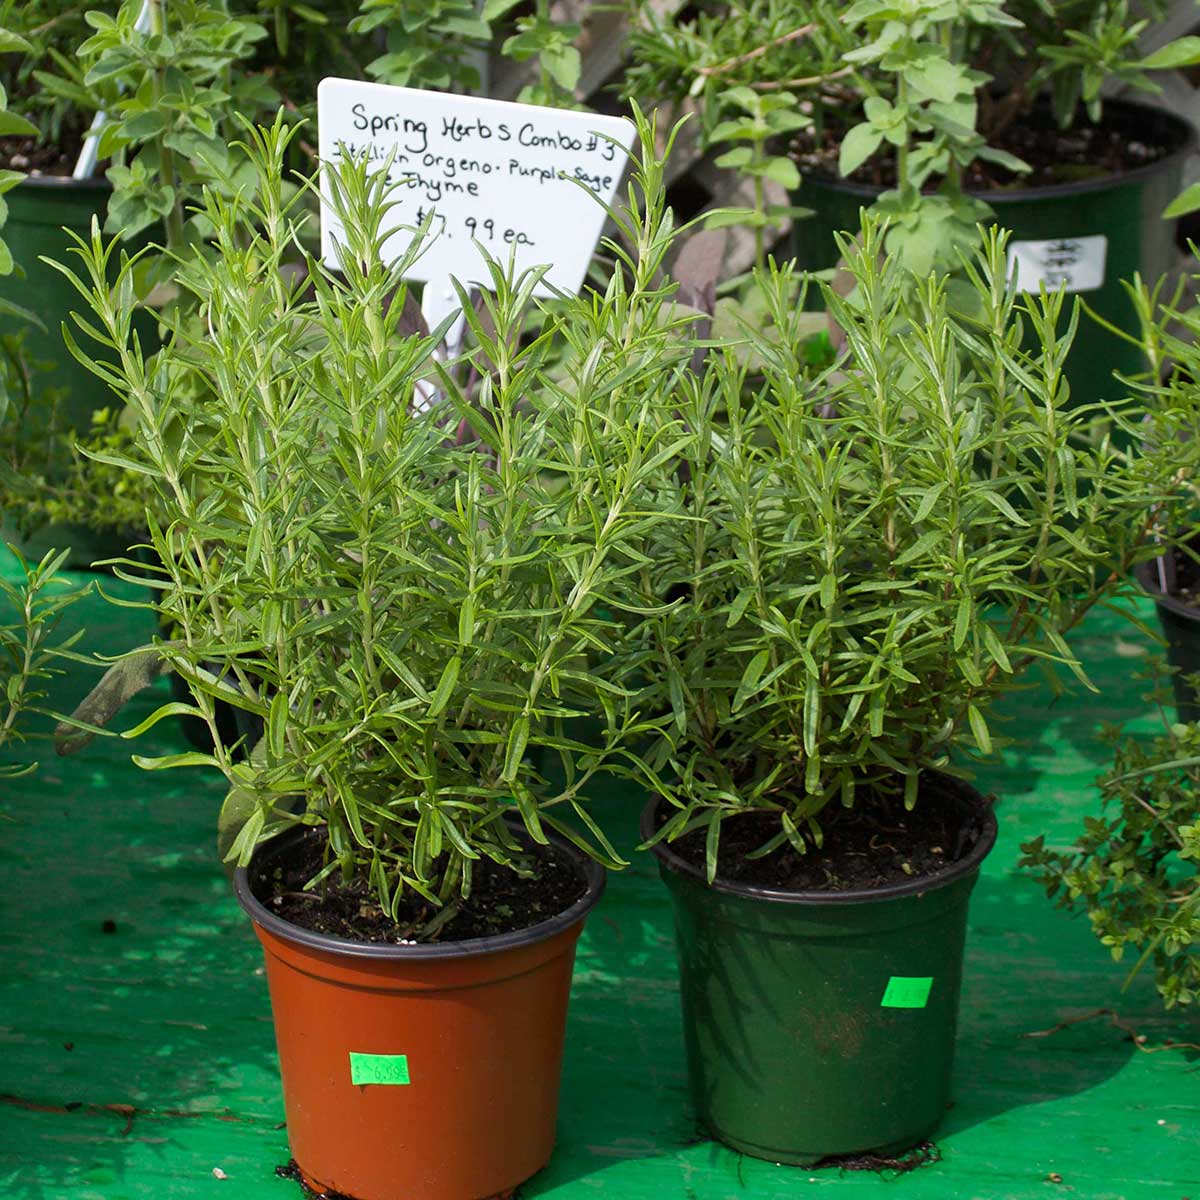 Companion Planting of Herbs